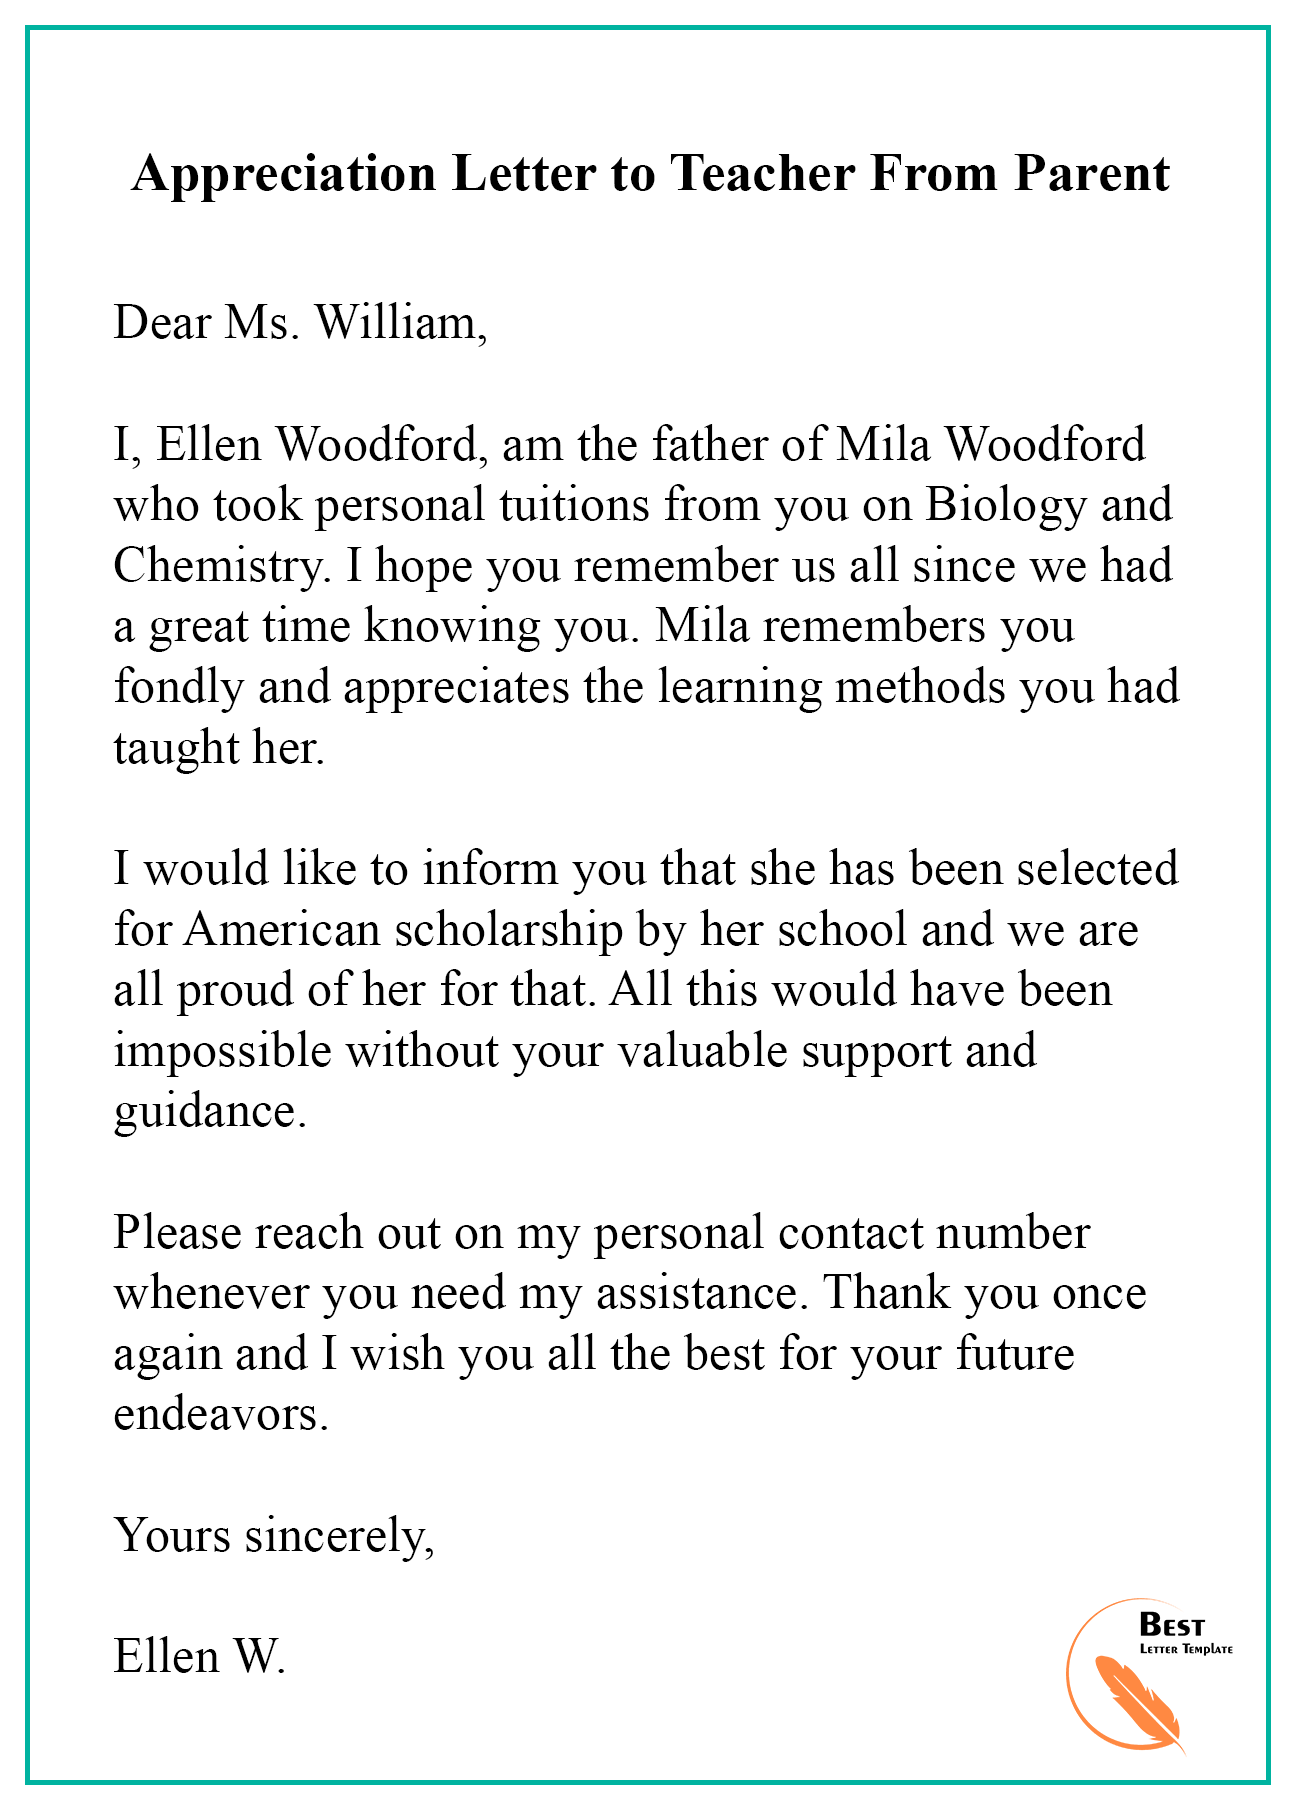 appreciation-letter-to-teacher-from-parent-best-letter-template